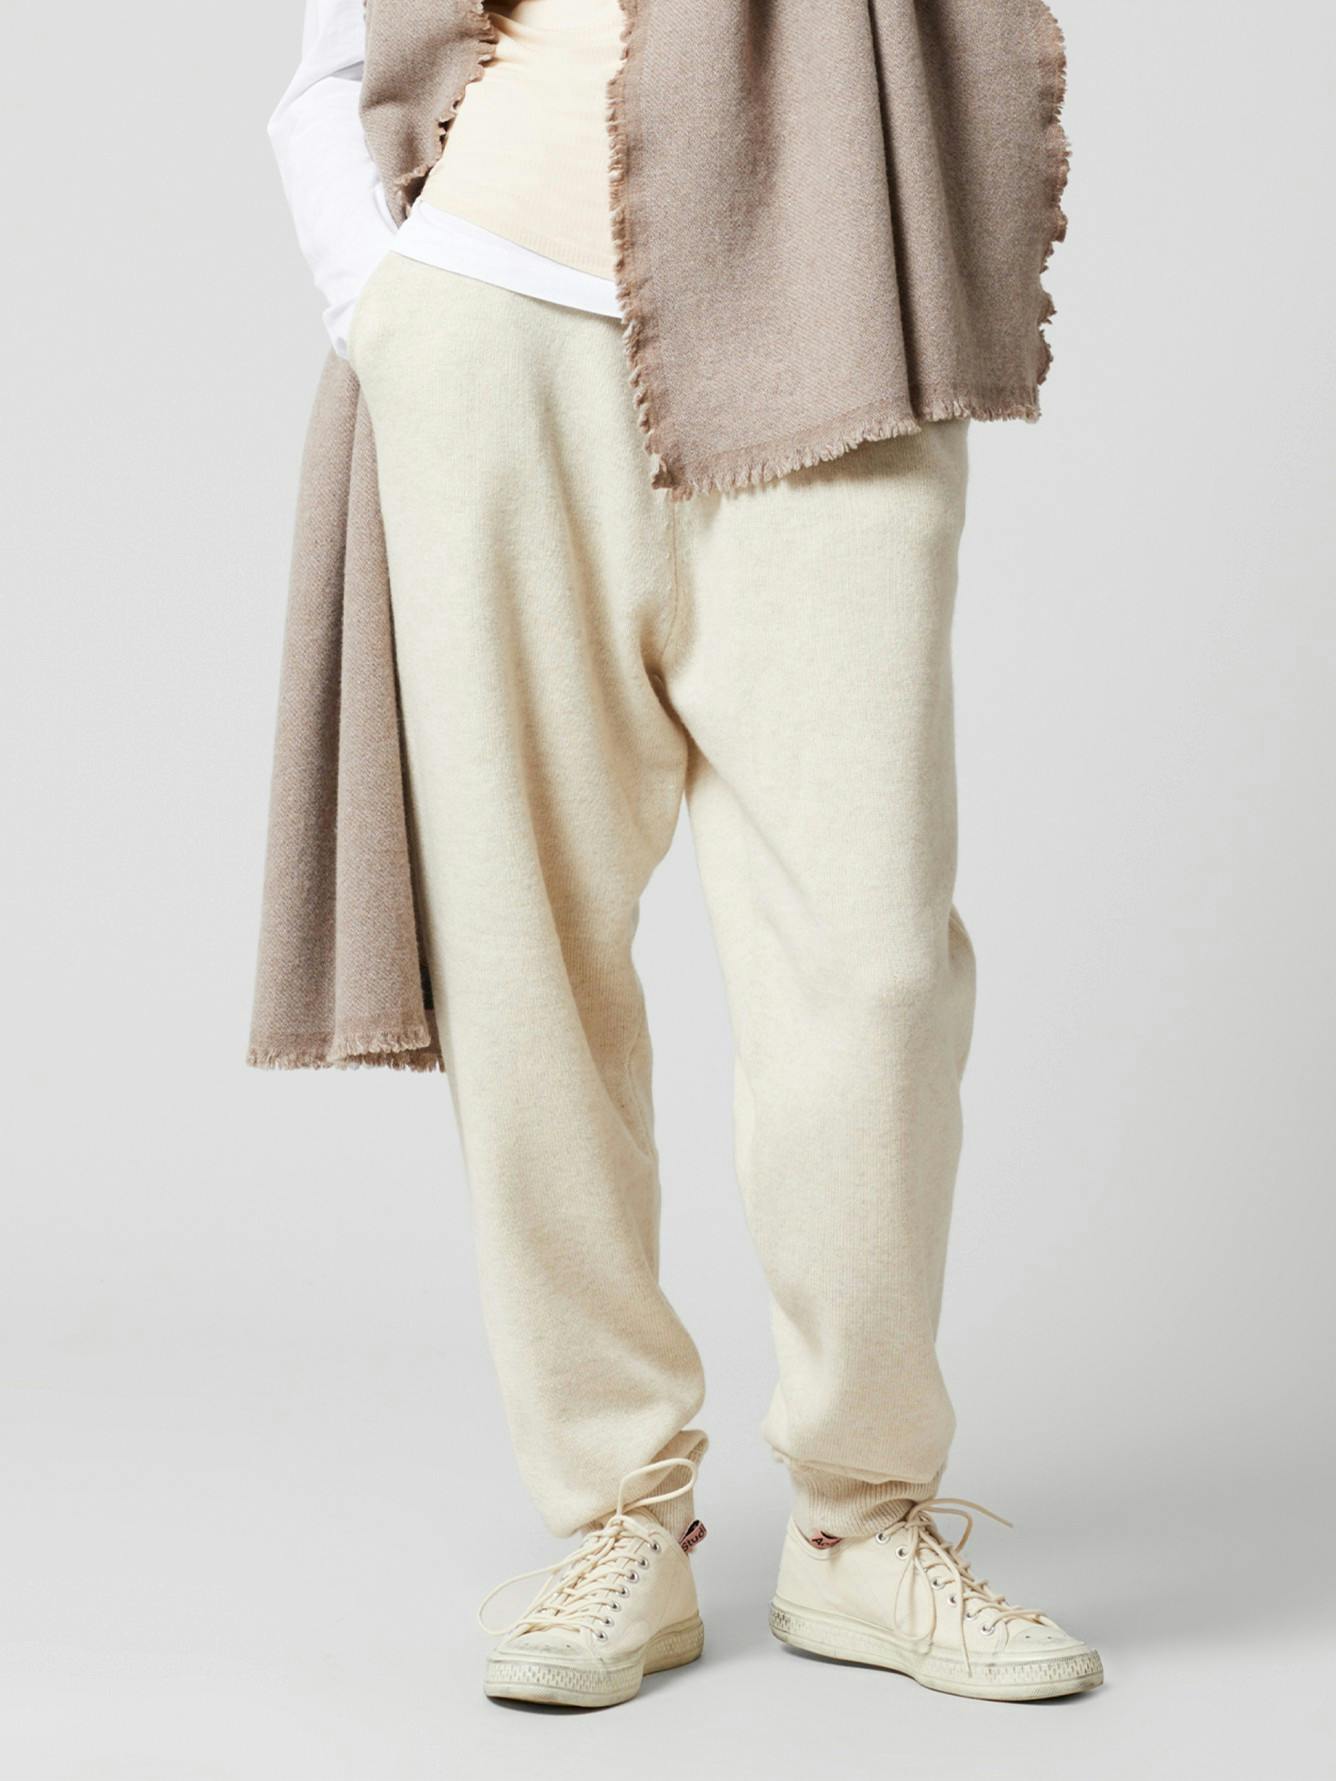 Arlotta Womens Cashmere Lounge Pants Style-2024 - Walmart.com